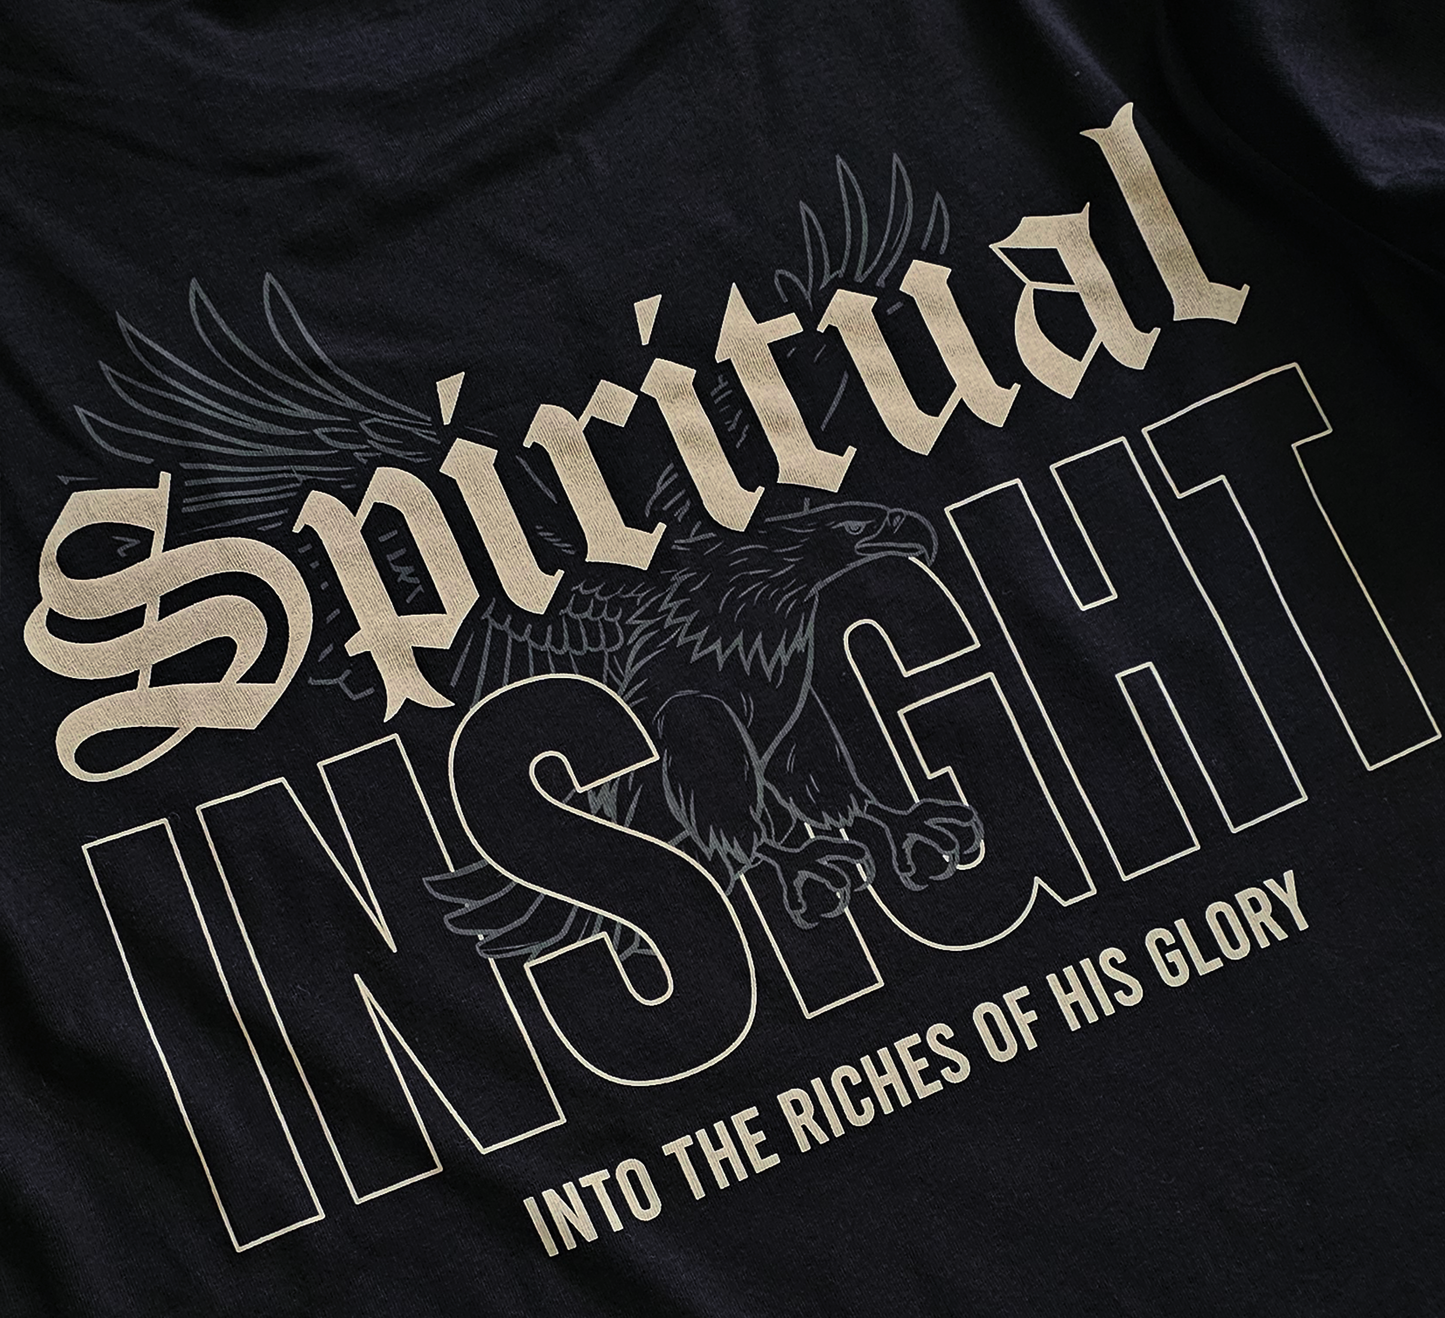 Spiritual Insight T-Shirt